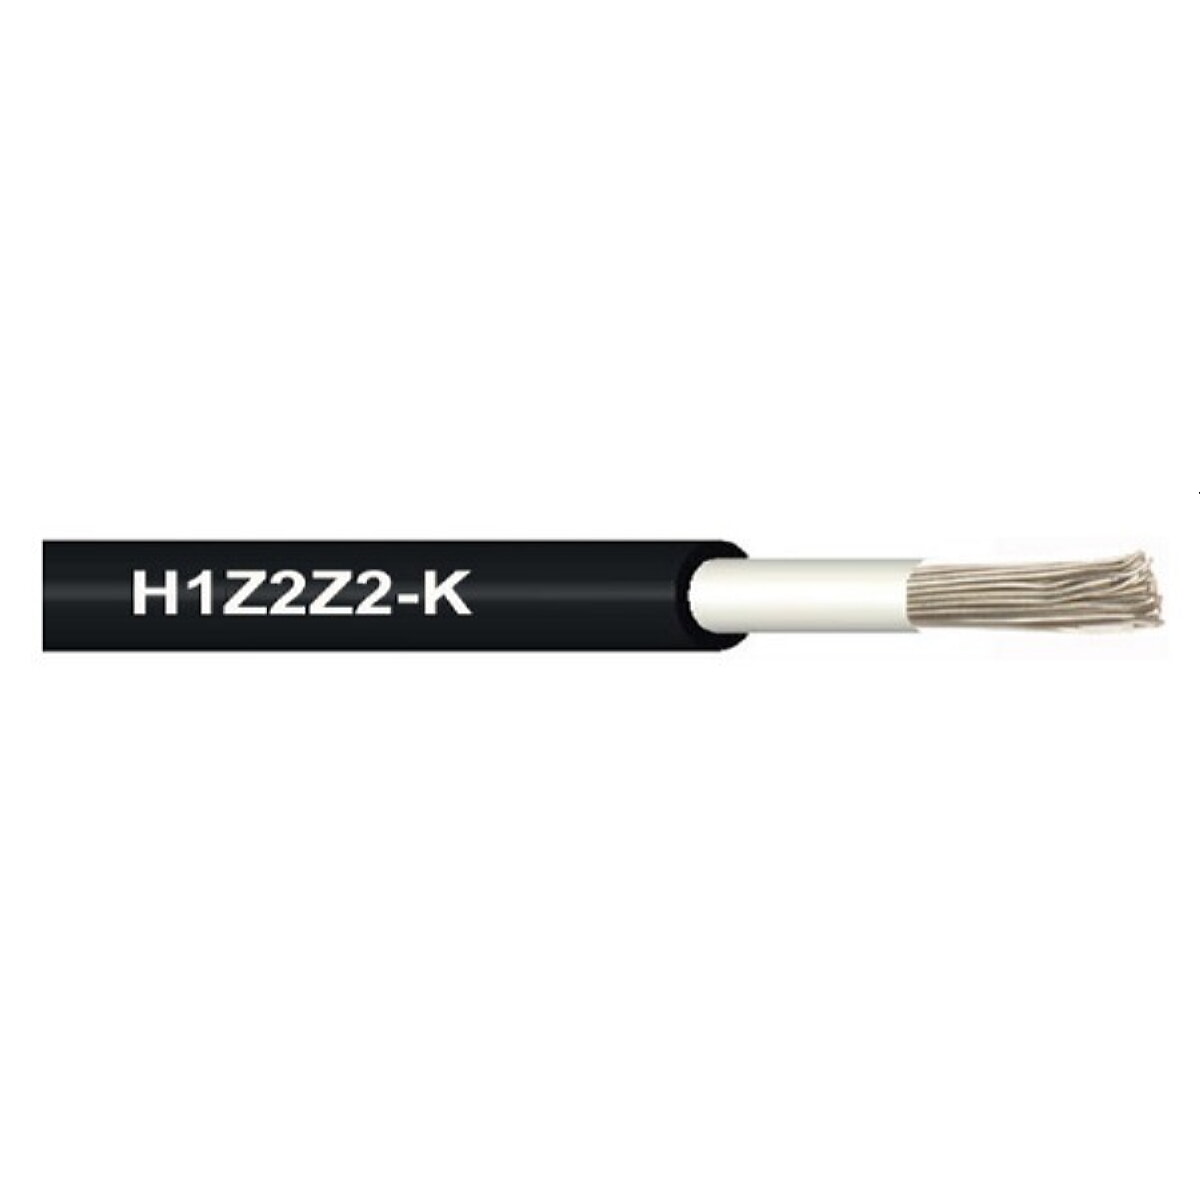 NEUT solar cable H1Z2Z2-K 1x10 black can be buried EN50618